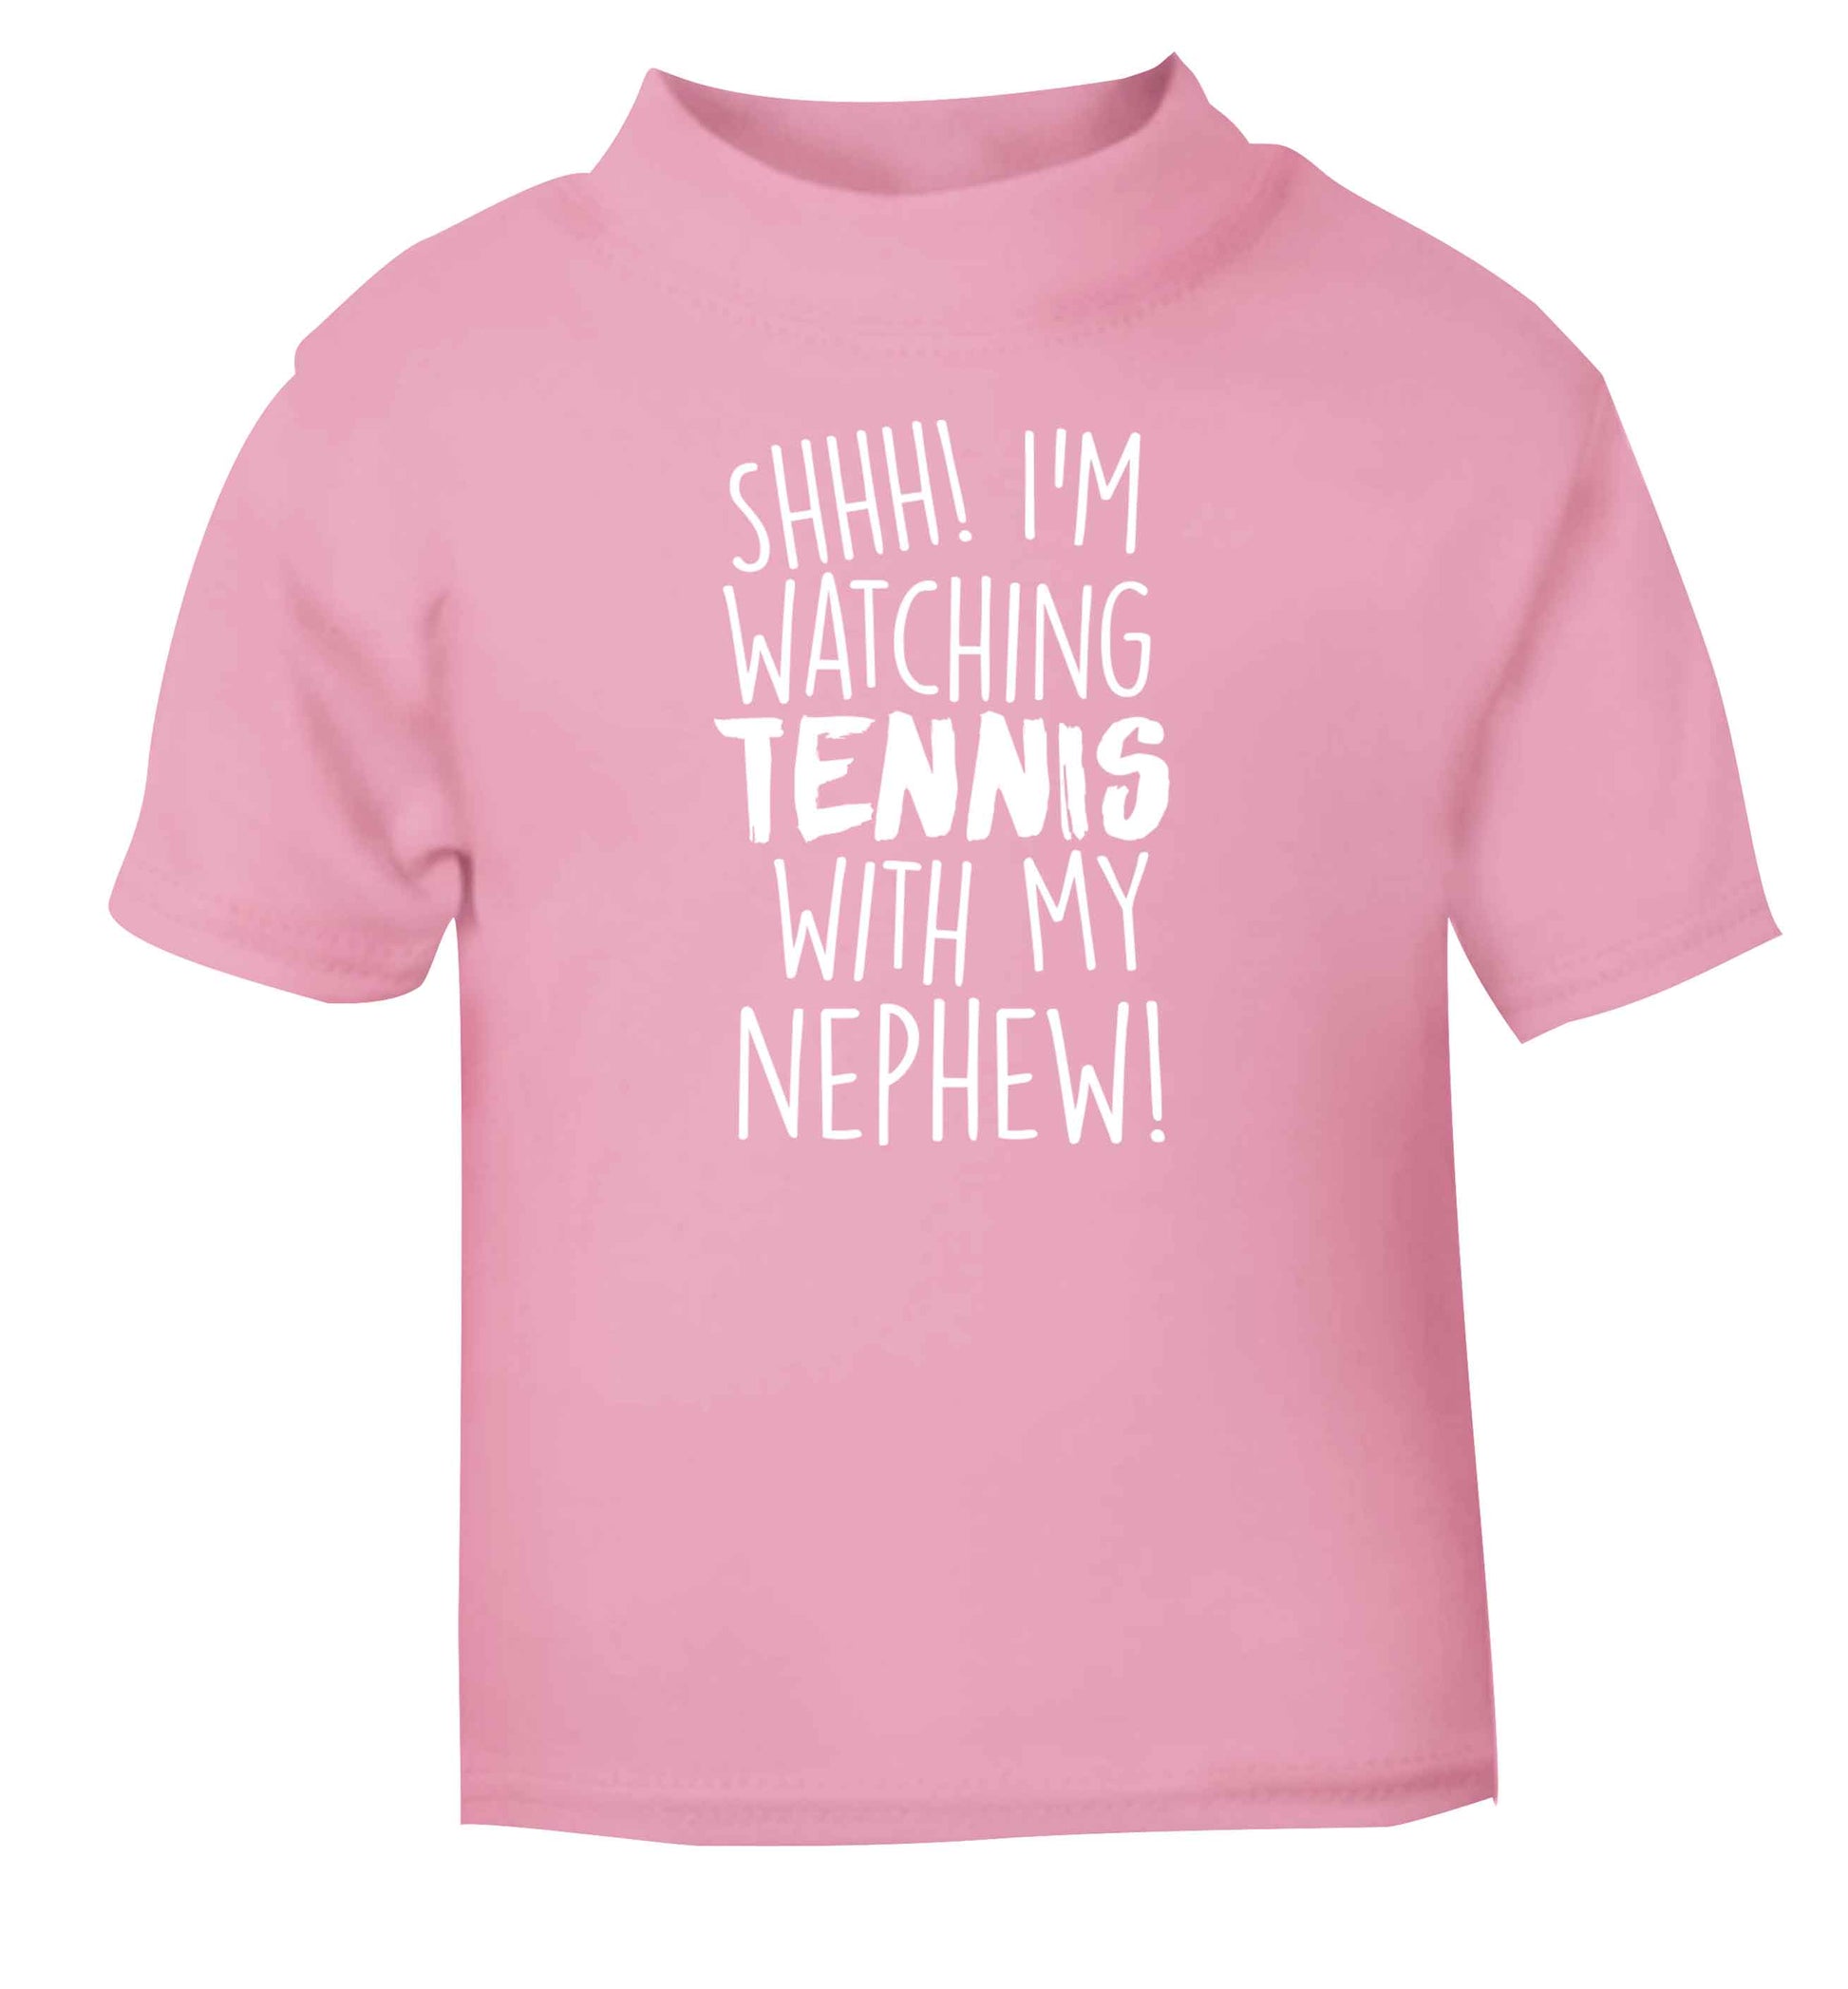 Shh! I'm watching tennis with my nephew! light pink Baby Toddler Tshirt 2 Years